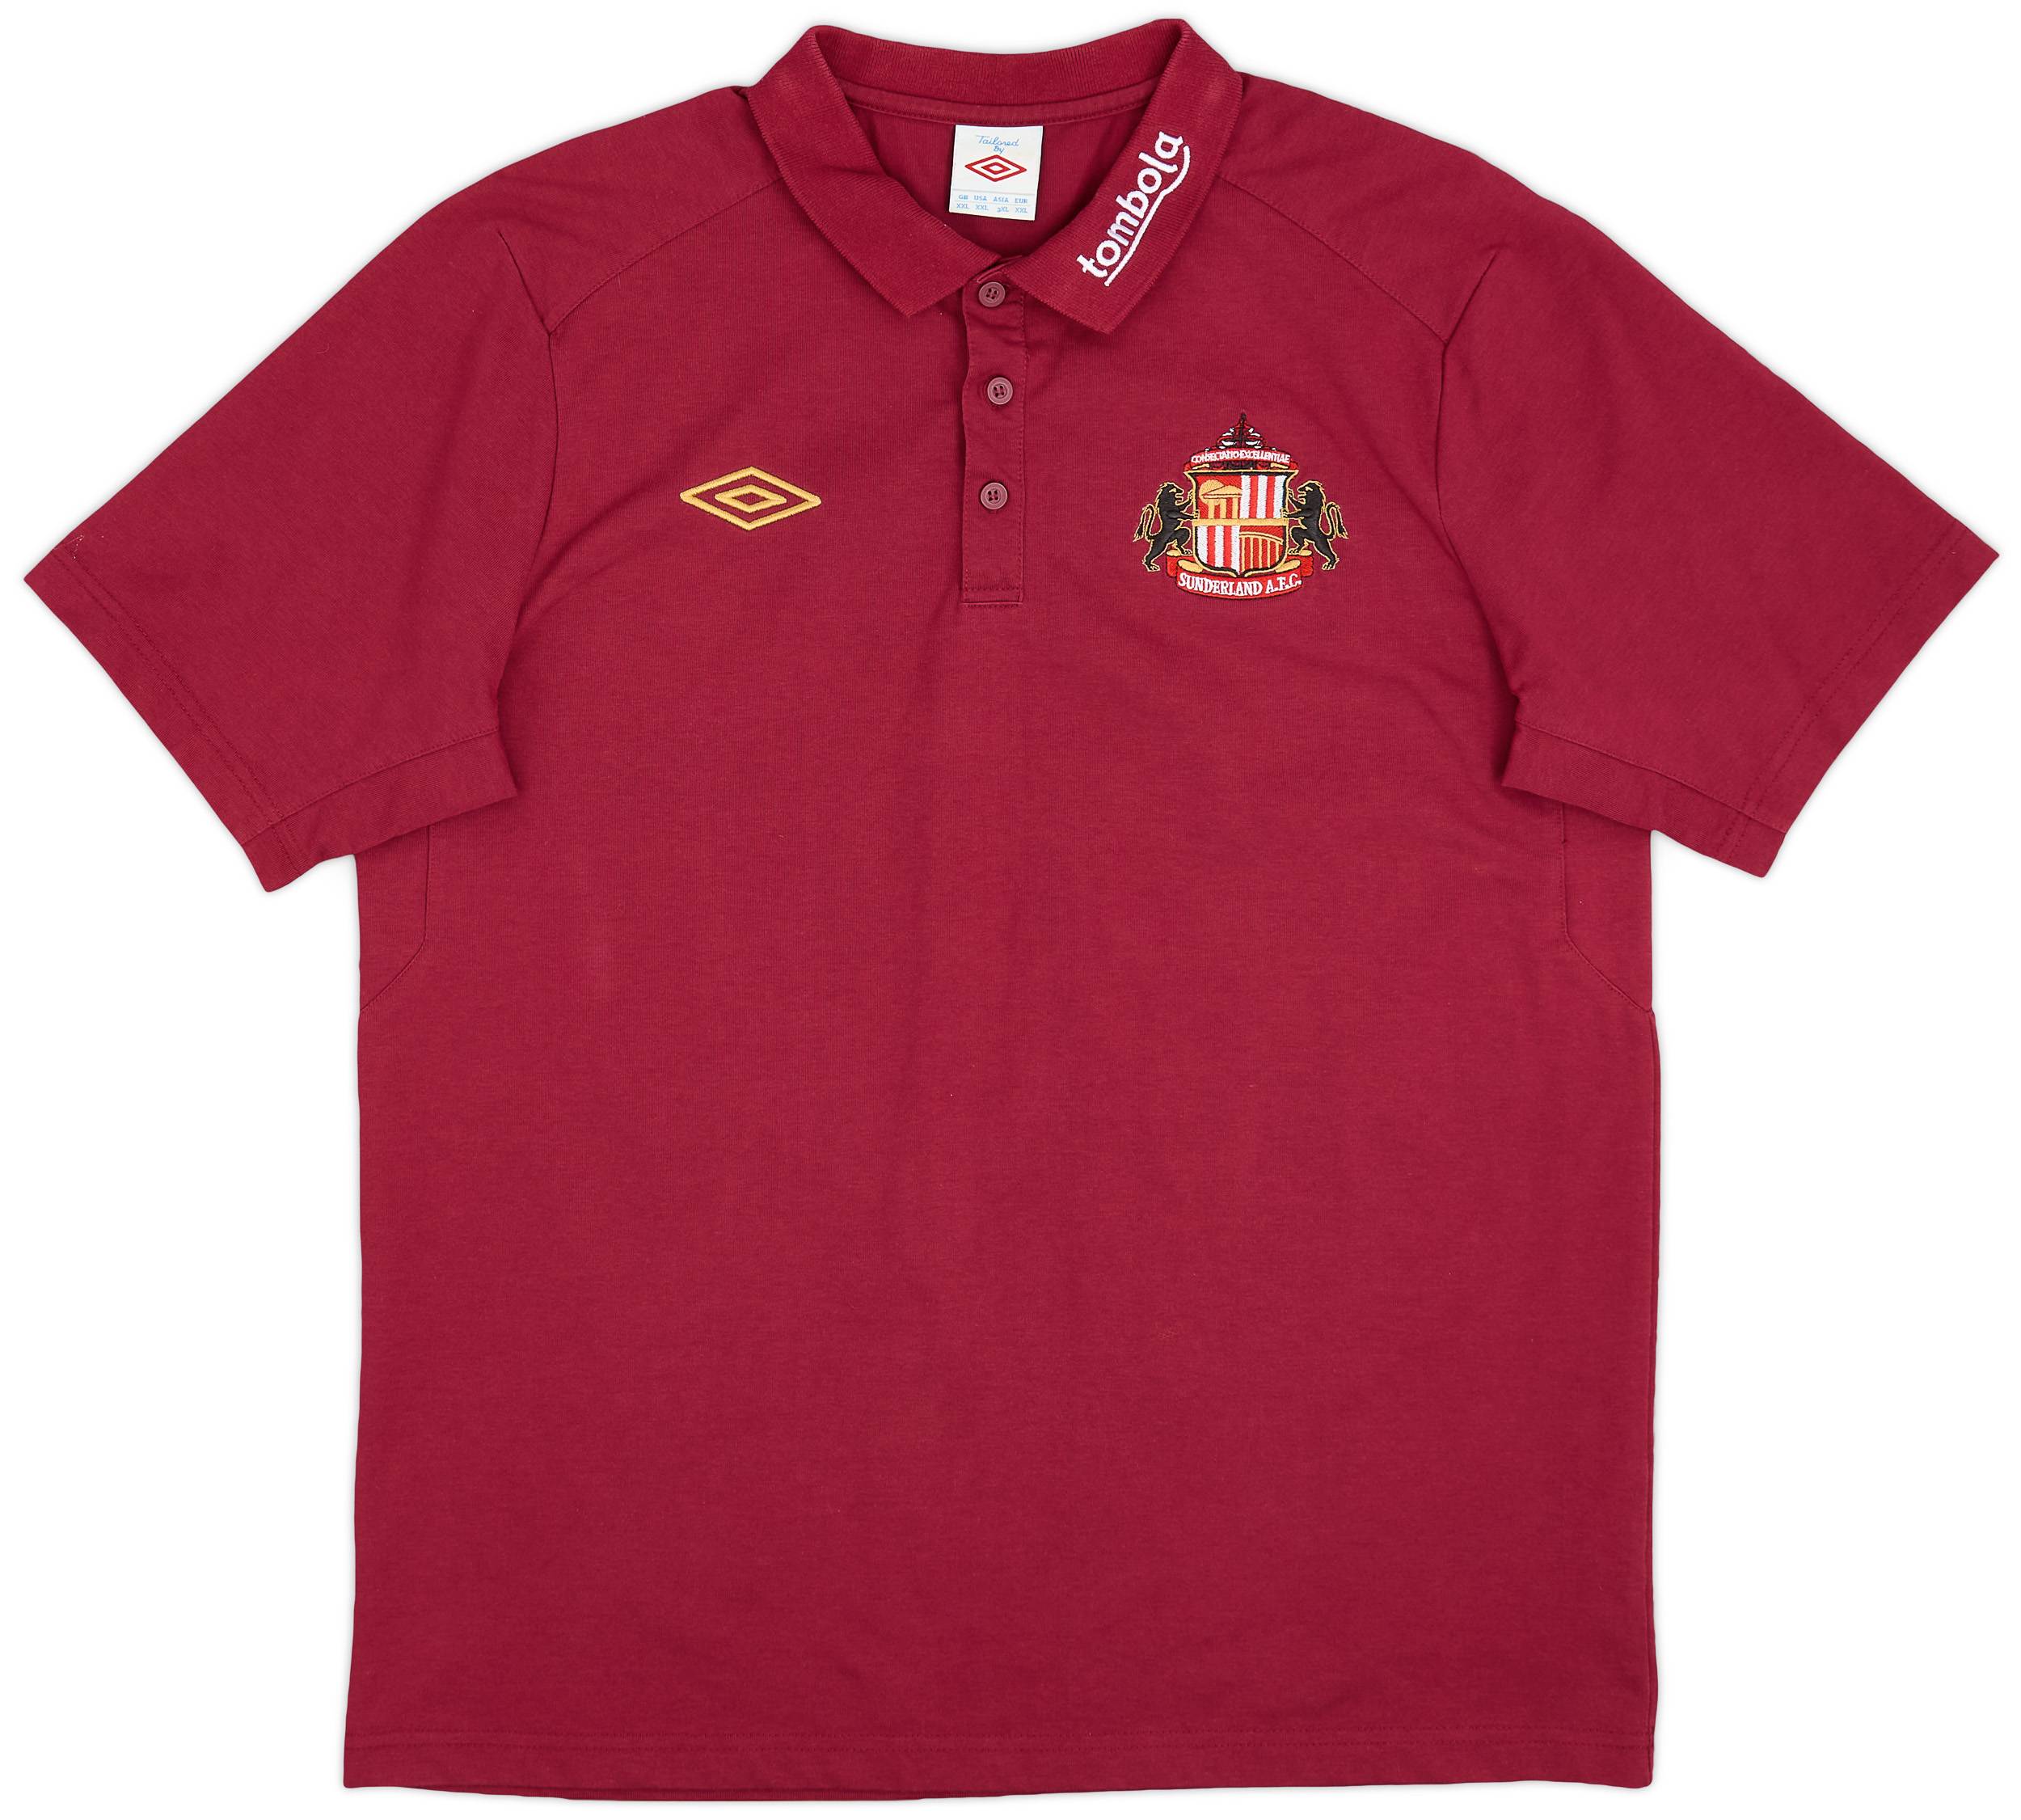 2010-11 Sunderland Umbro Polo Shirt - 10/10 - (XXL)